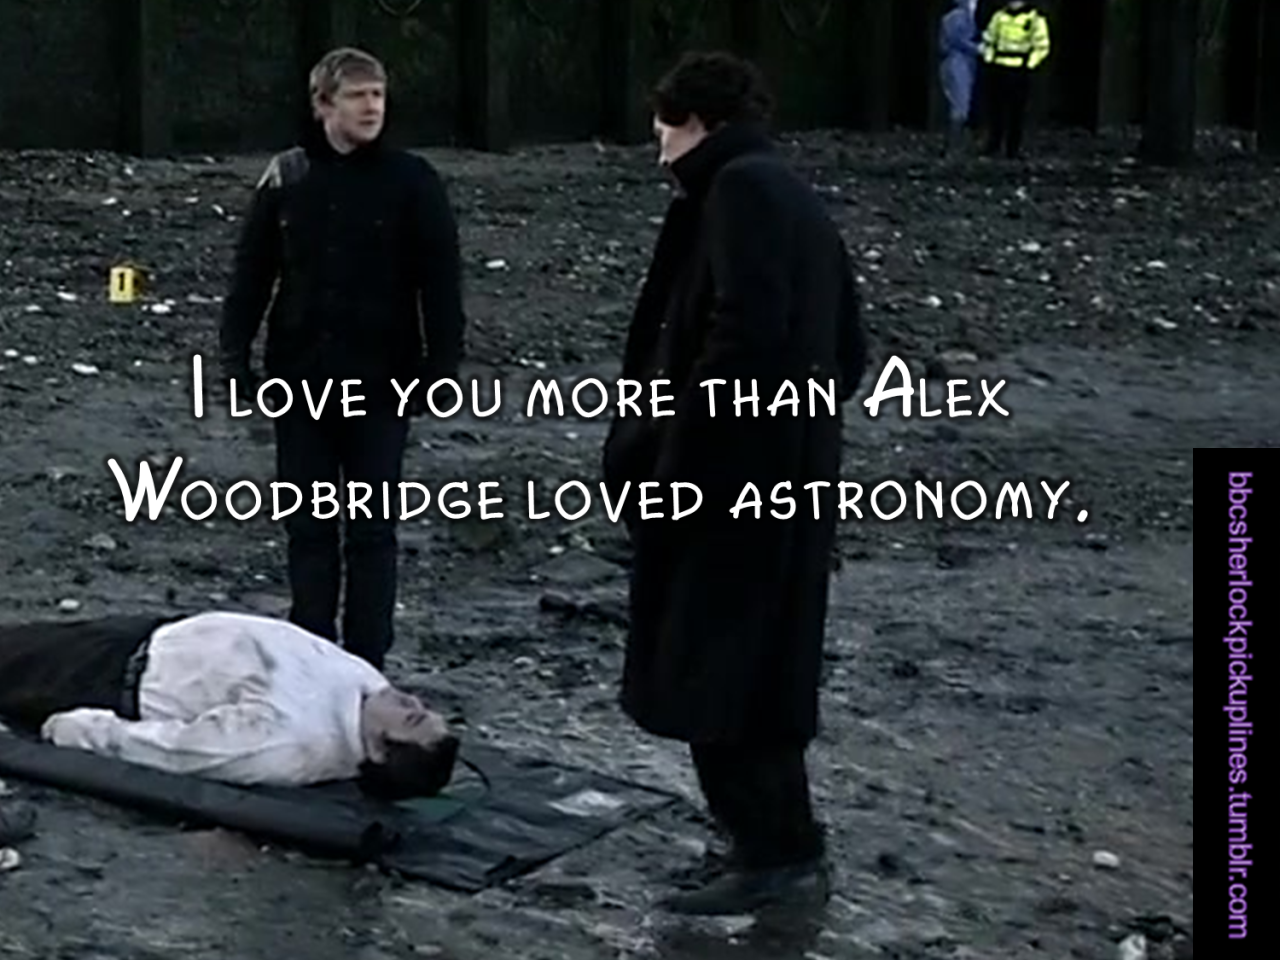 â€œI love you more than Alex Woodbridge loved astronomy.â€